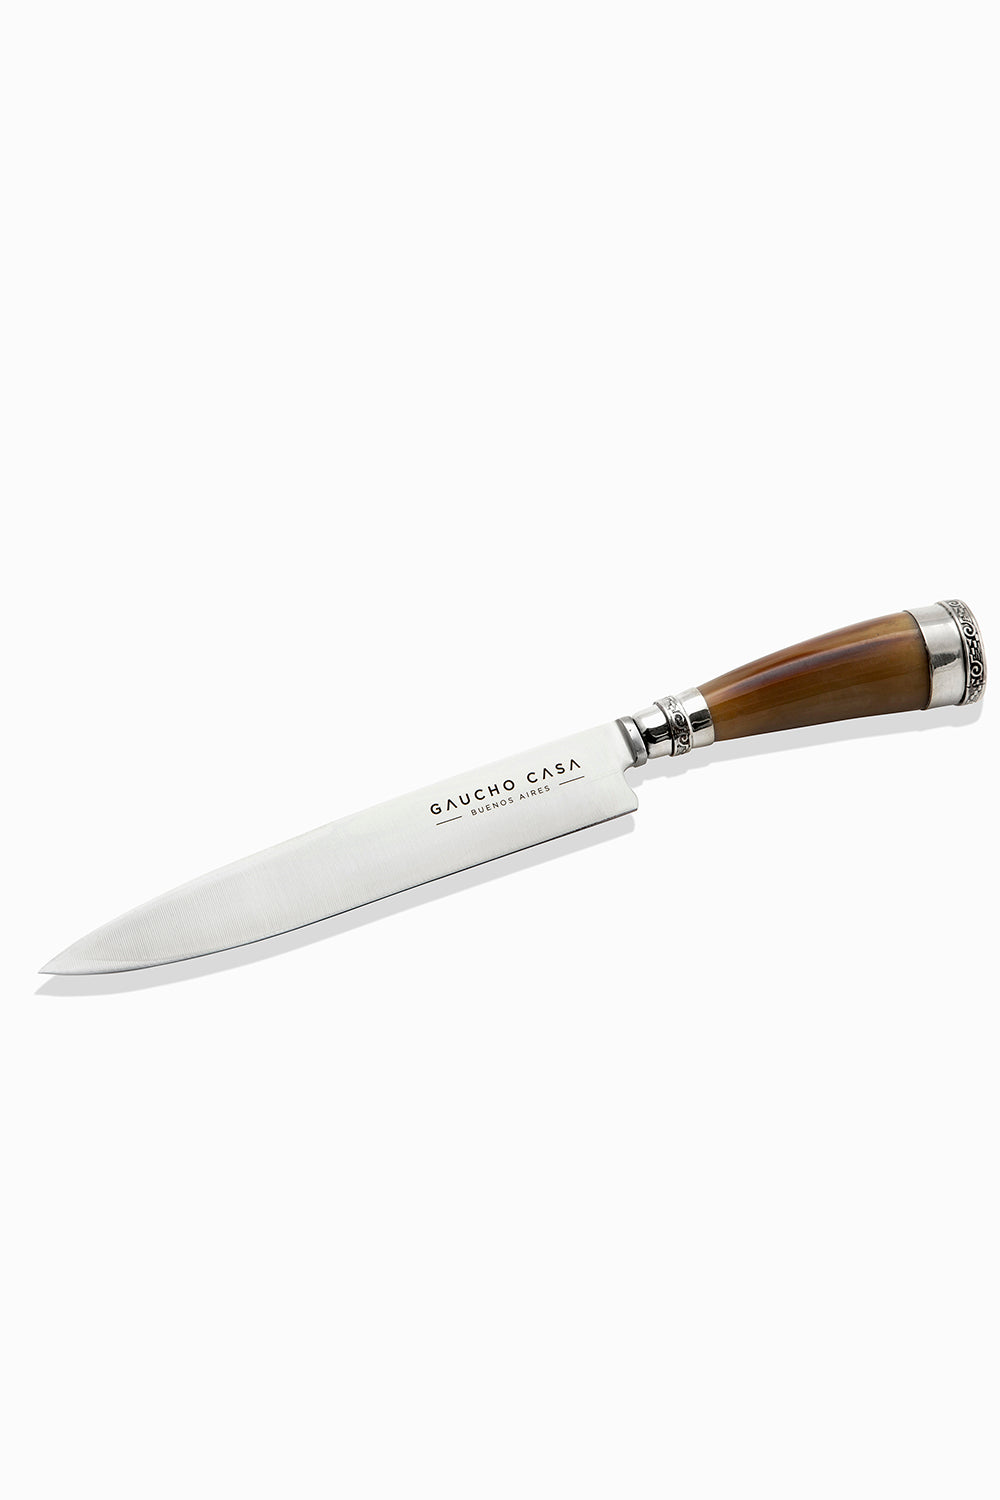 Tail-Gater 15 inch BBQ Knife, Walnut Handle